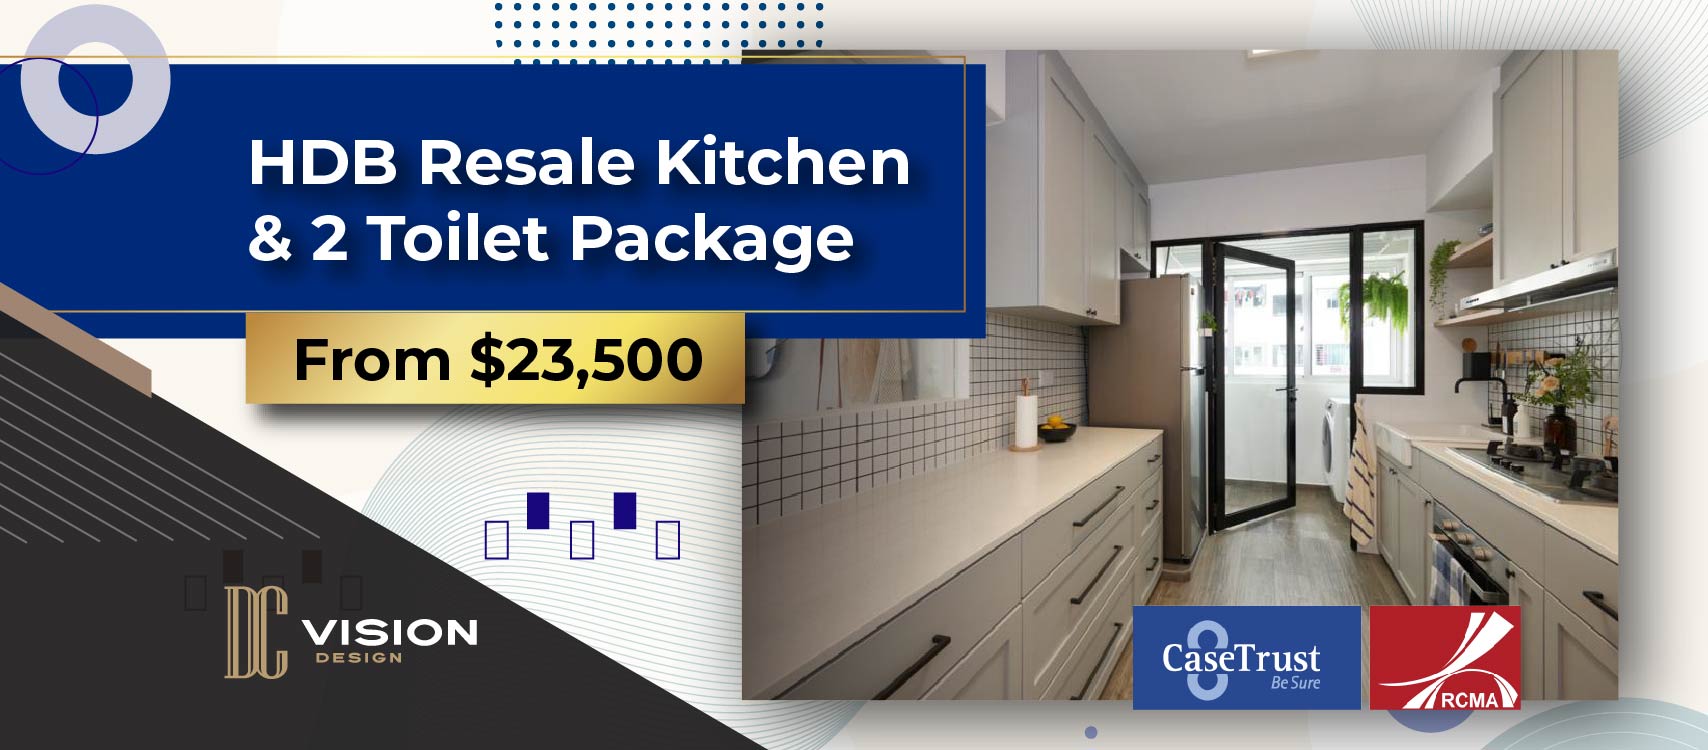 HDB resale kitchen & 2 Toilet package